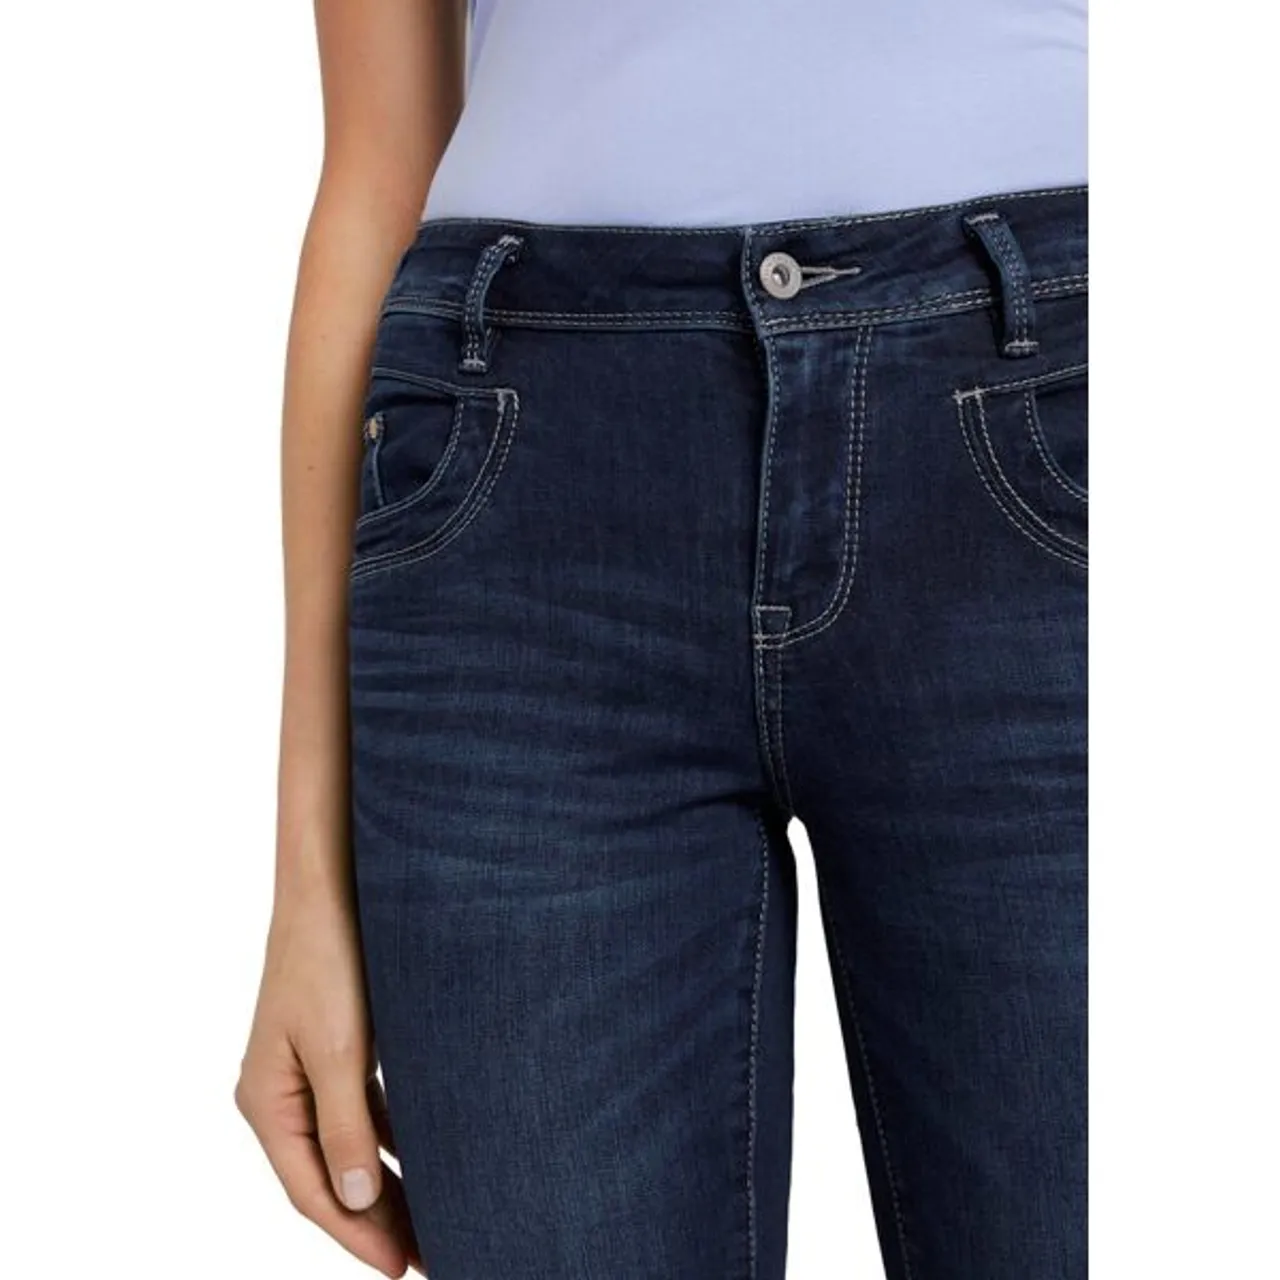 Gerade Jeans TOM TAILOR "Alexa Straight" Gr. 30, Länge 30, blau (dark stone washed) Damen Jeans Gerade Bestseller